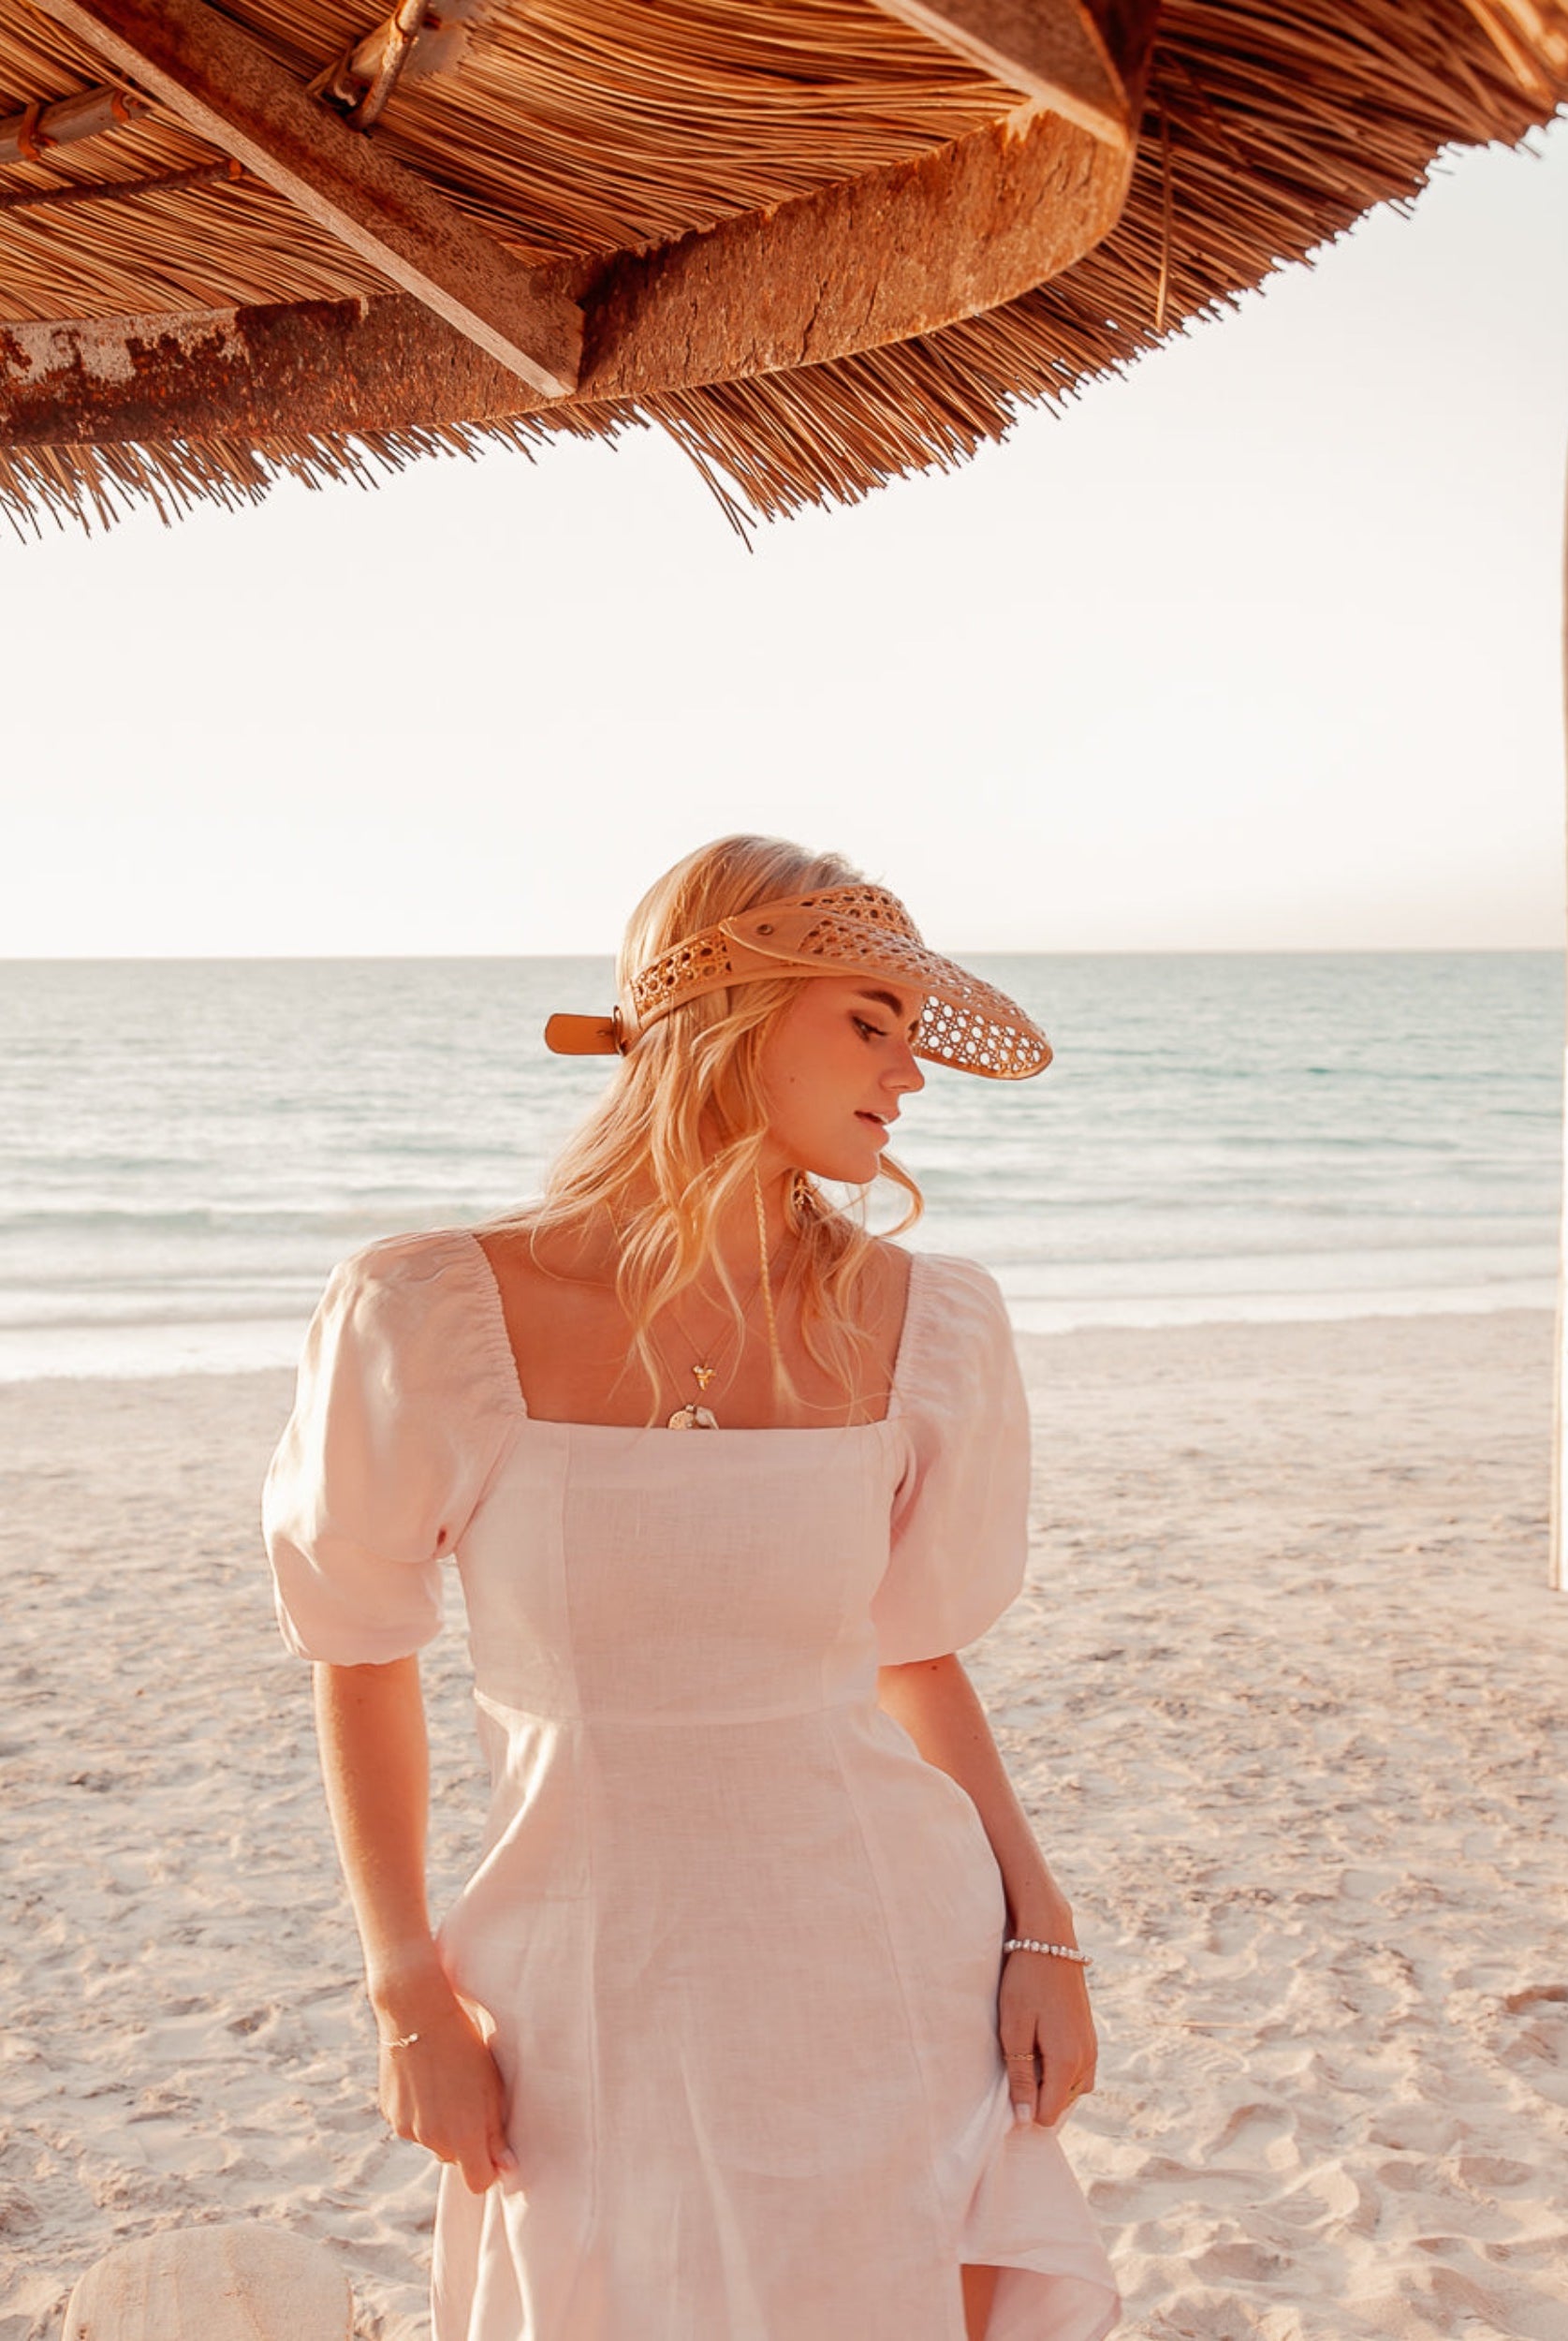 Blonde model wearing pale pink monte dress on a beach